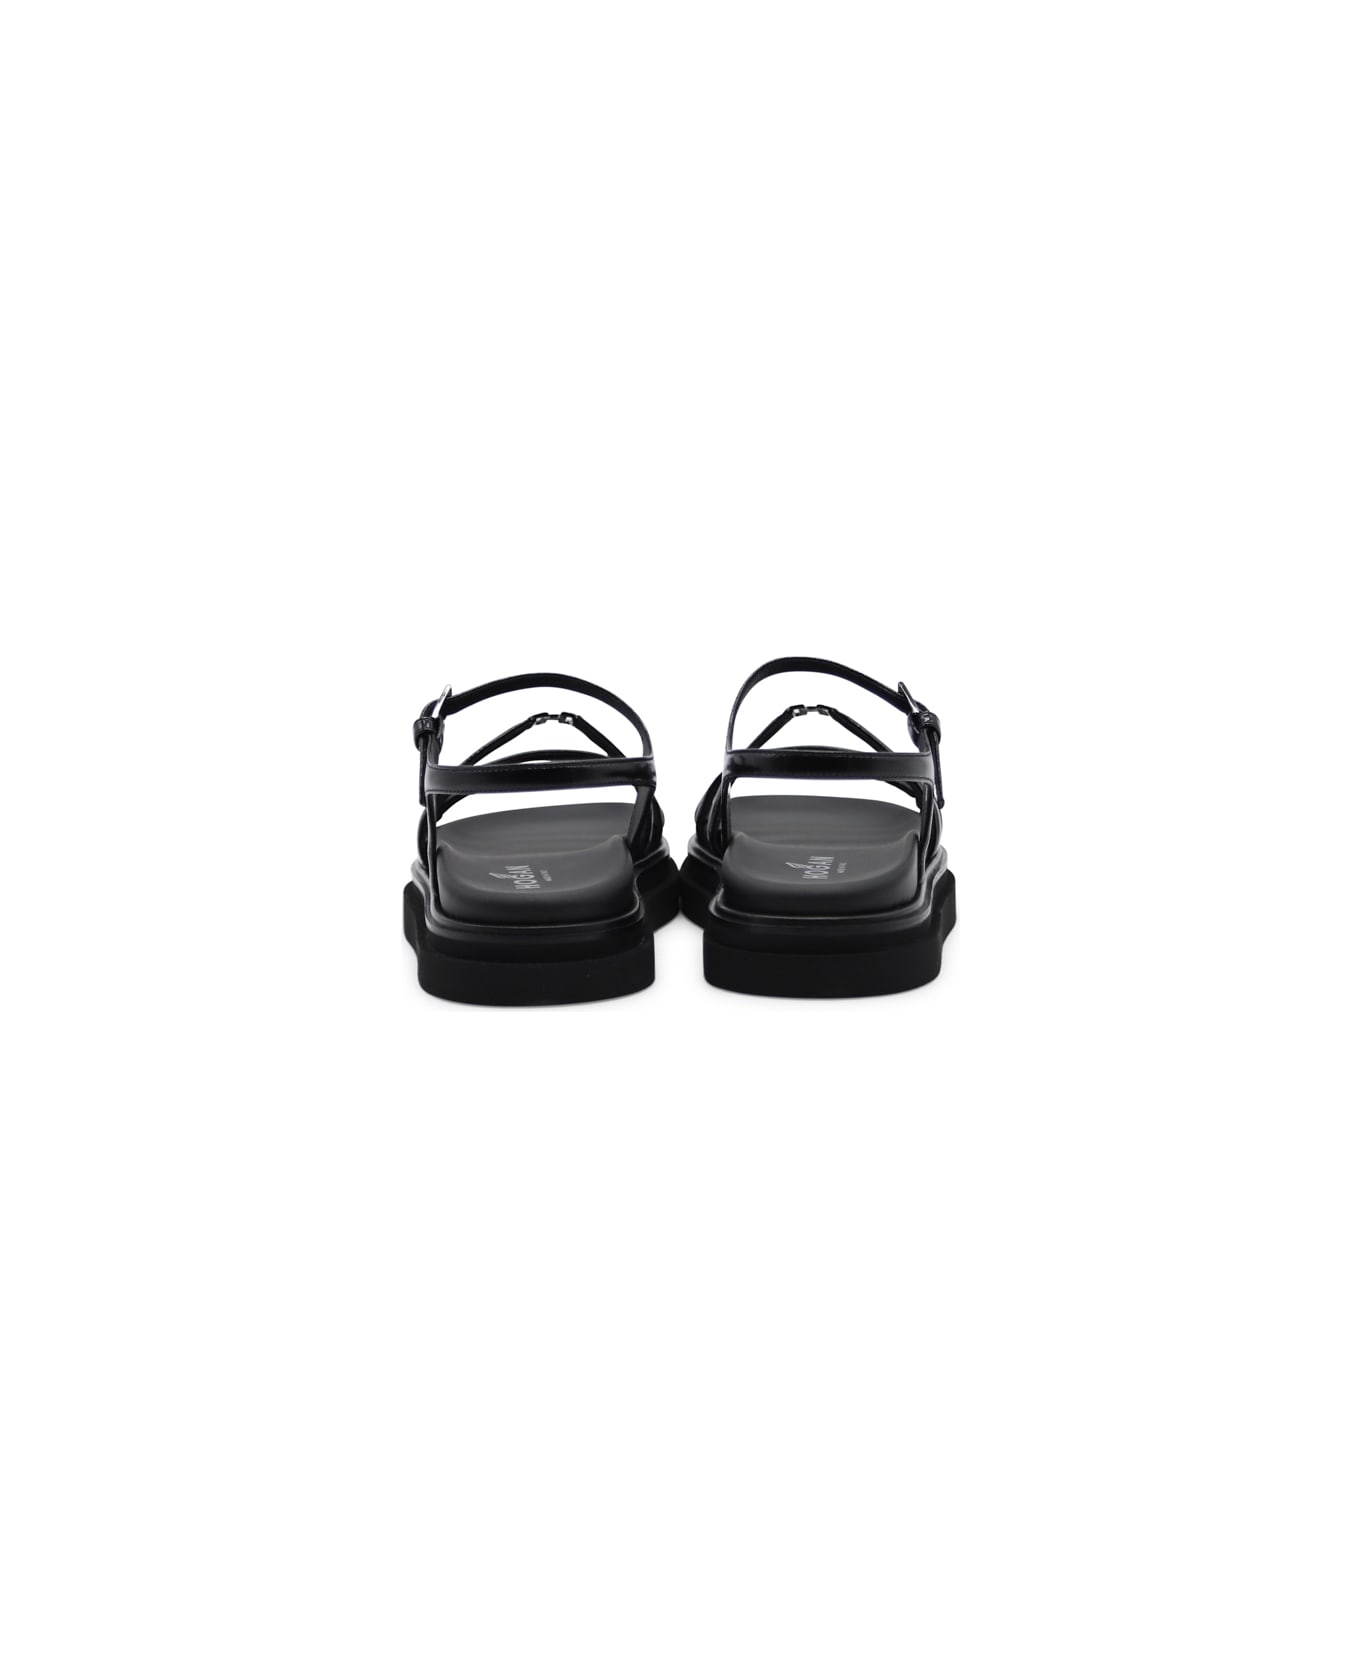 Hogan Patent Leather Sandals - Black サンダル